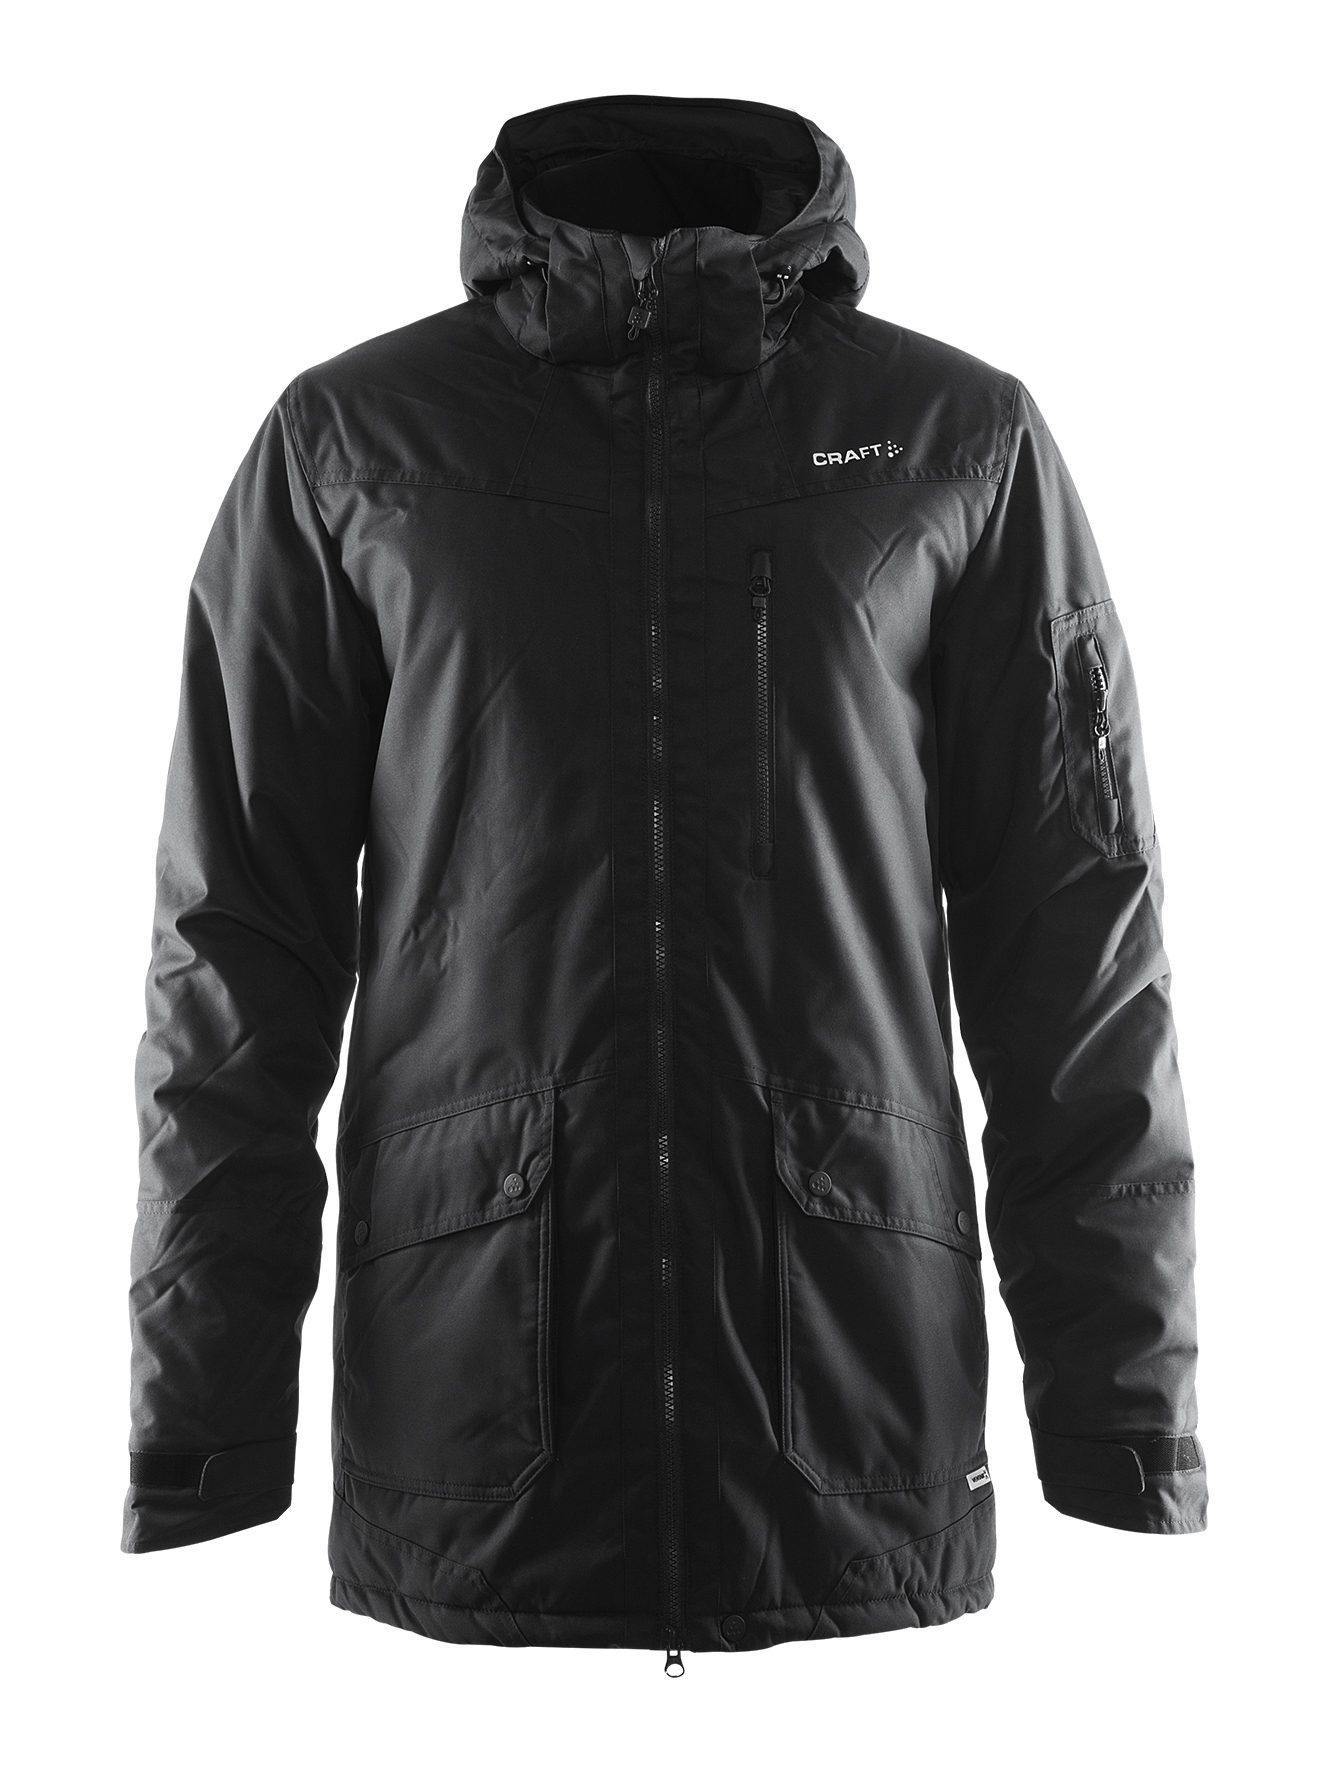 Parker Jacket M - Black | Craft Sportswear